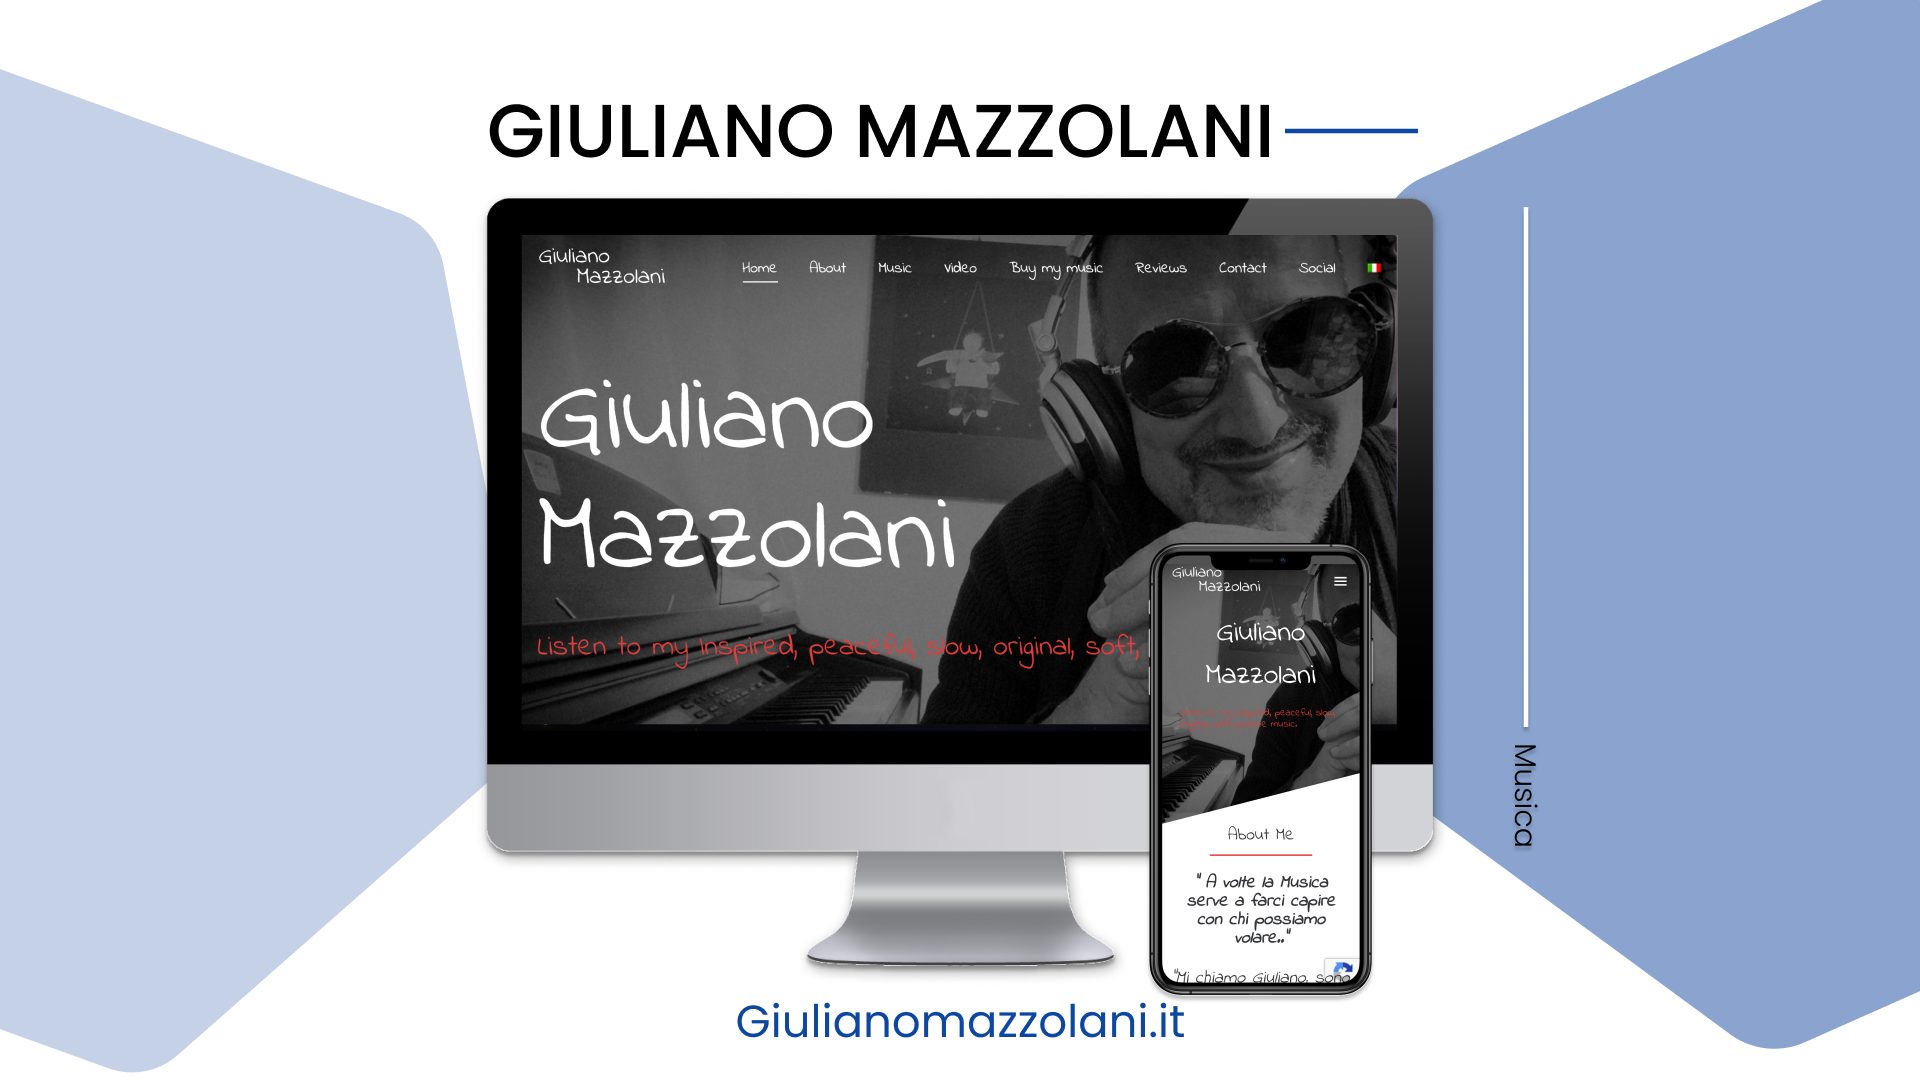 Giuliano Mazzolani